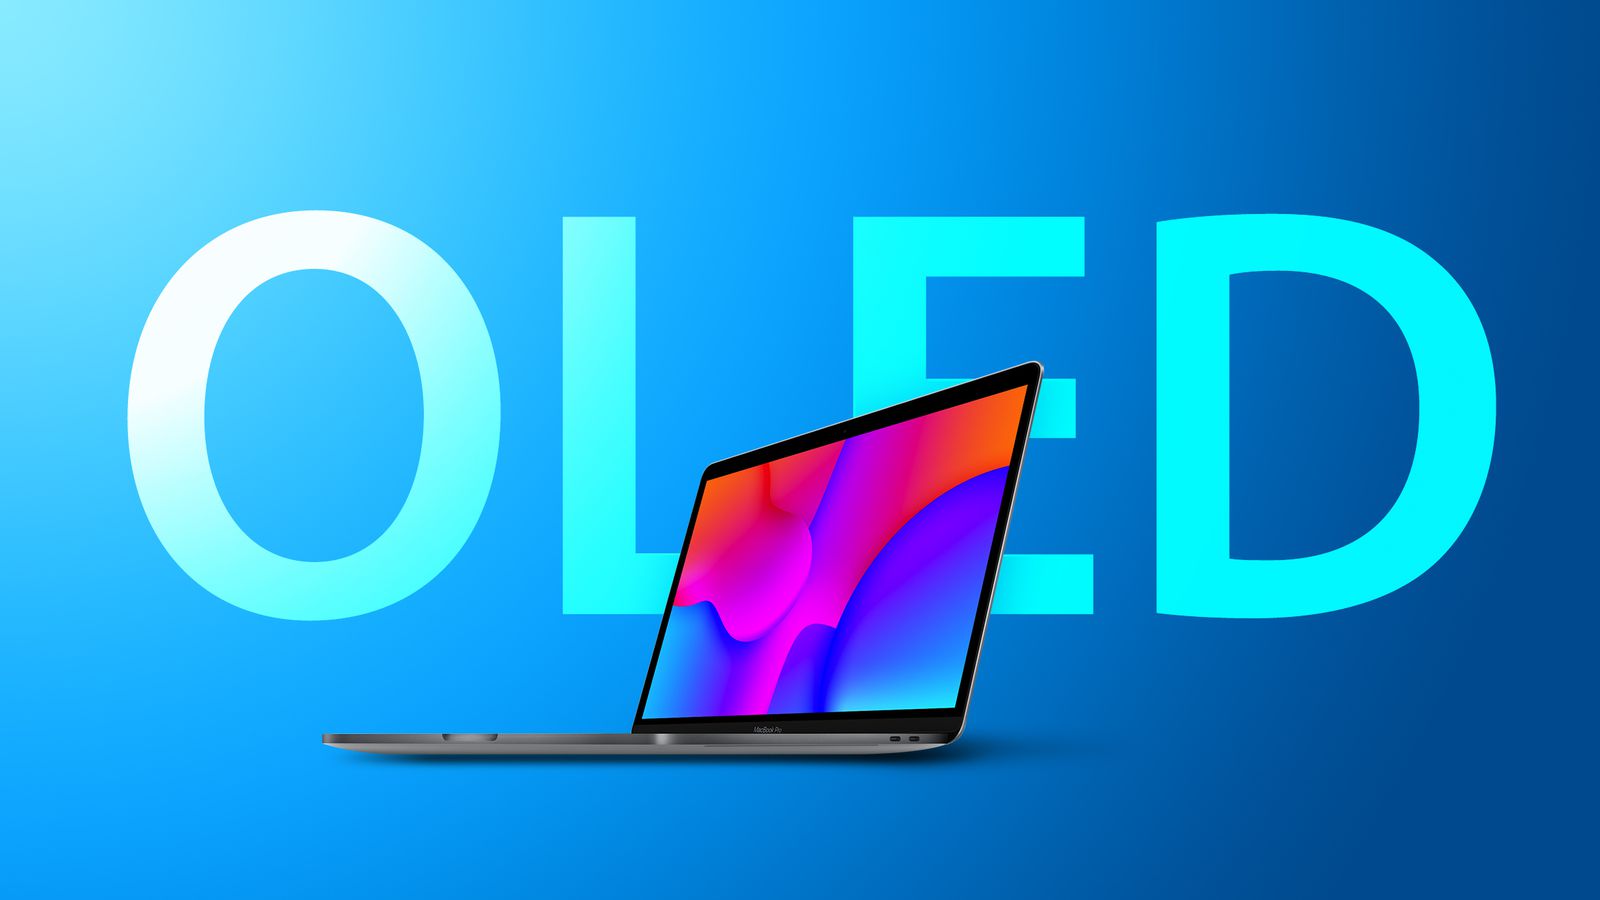 MacBook OLED